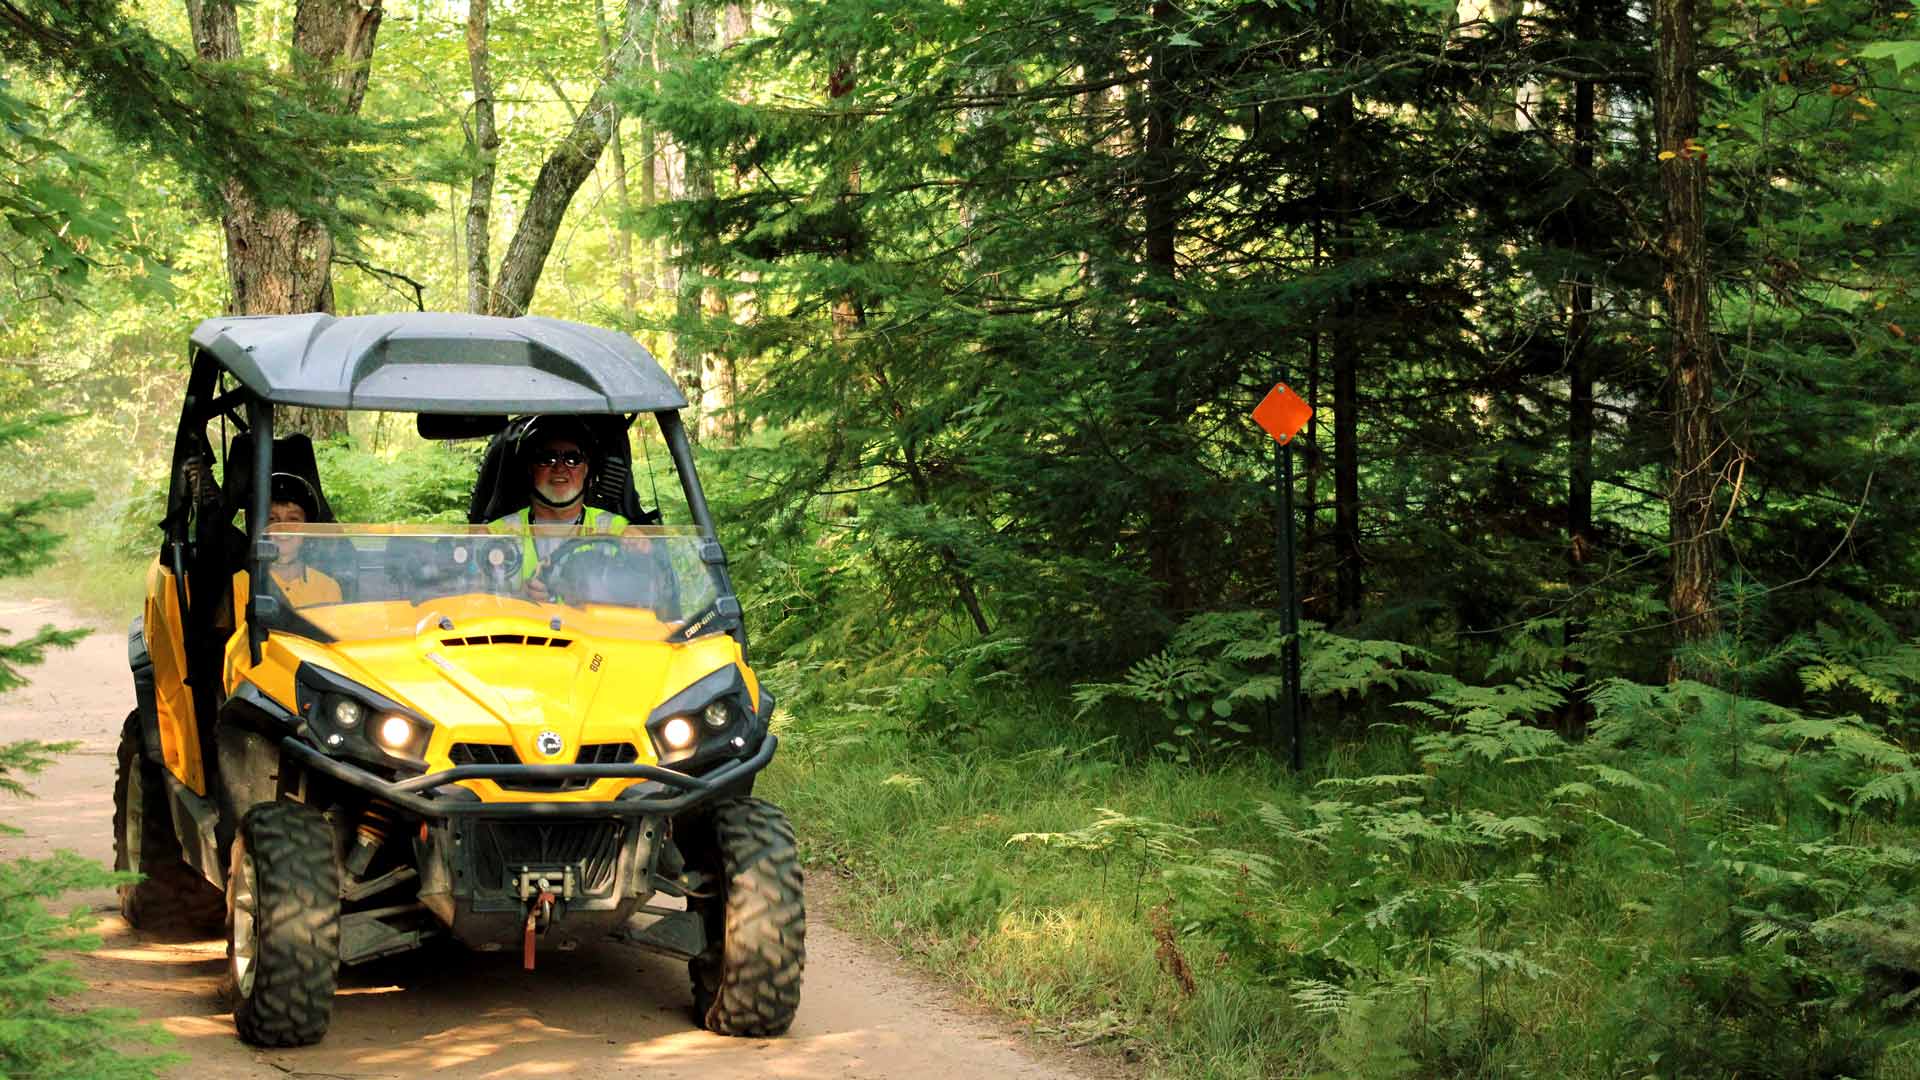 Lakeland ATV/UTV Club trails in southern Vilas County, Wisconsin.